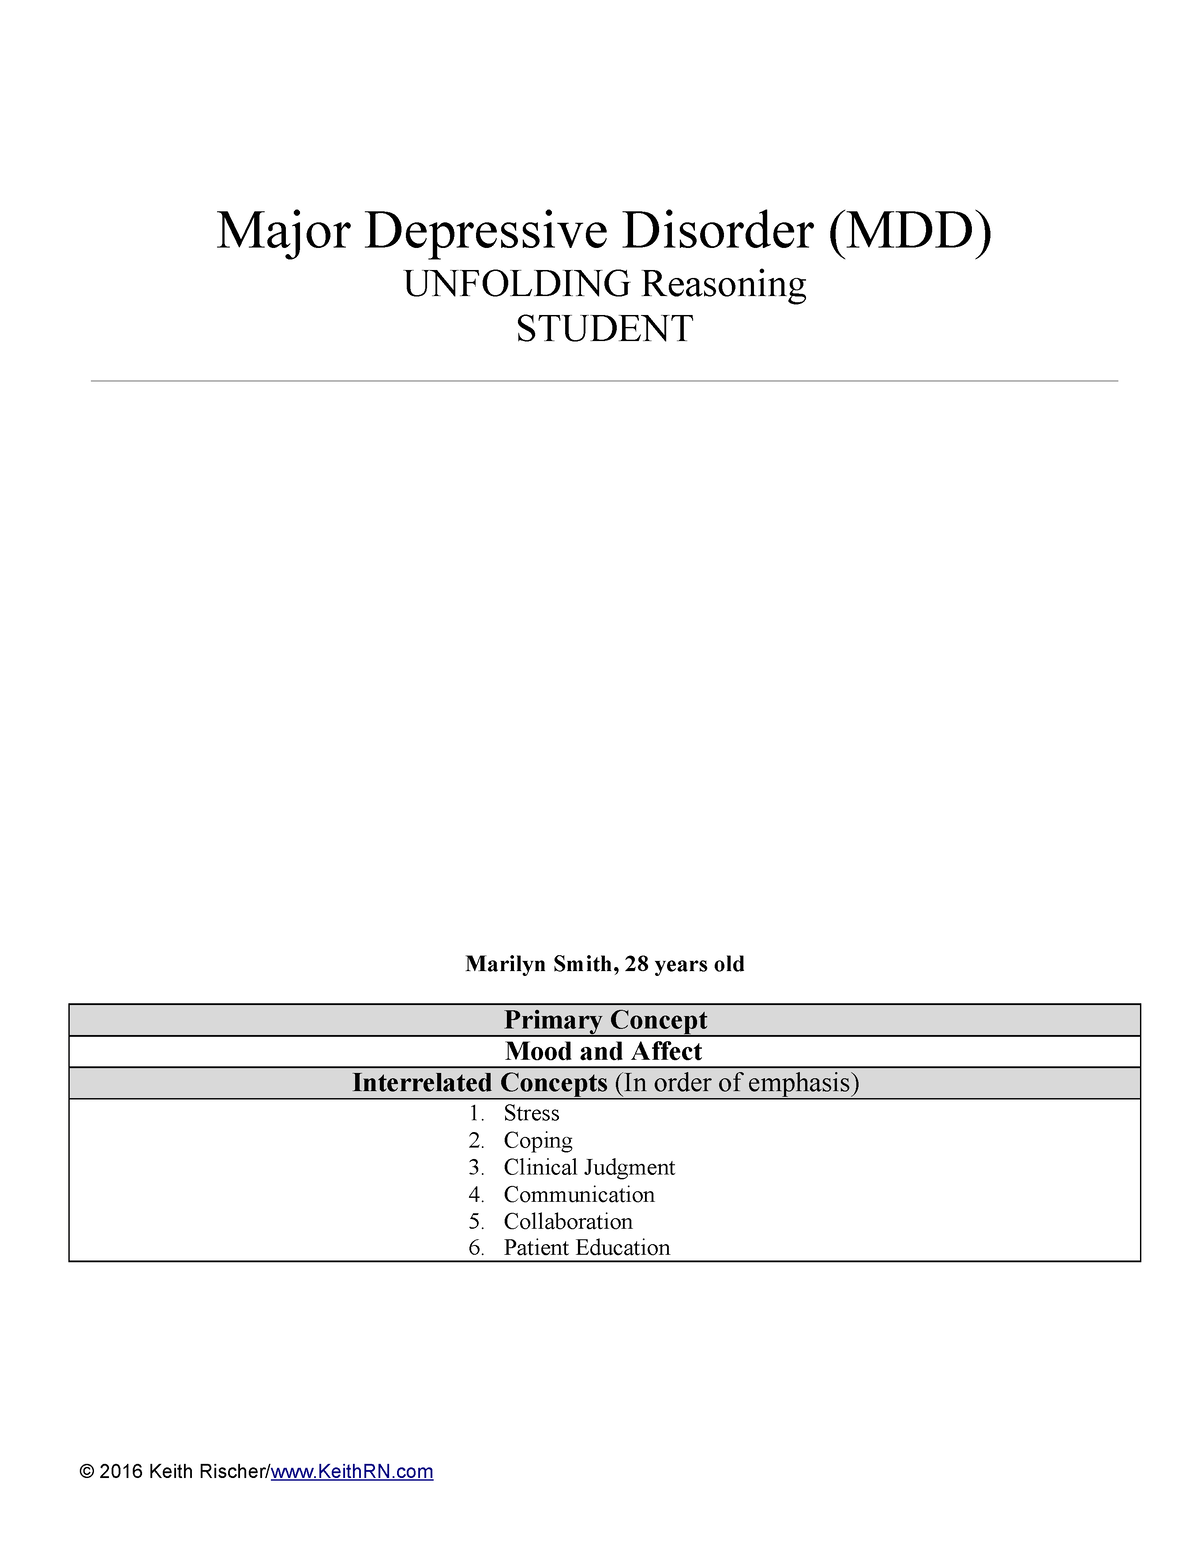 case study about major depressive disorder